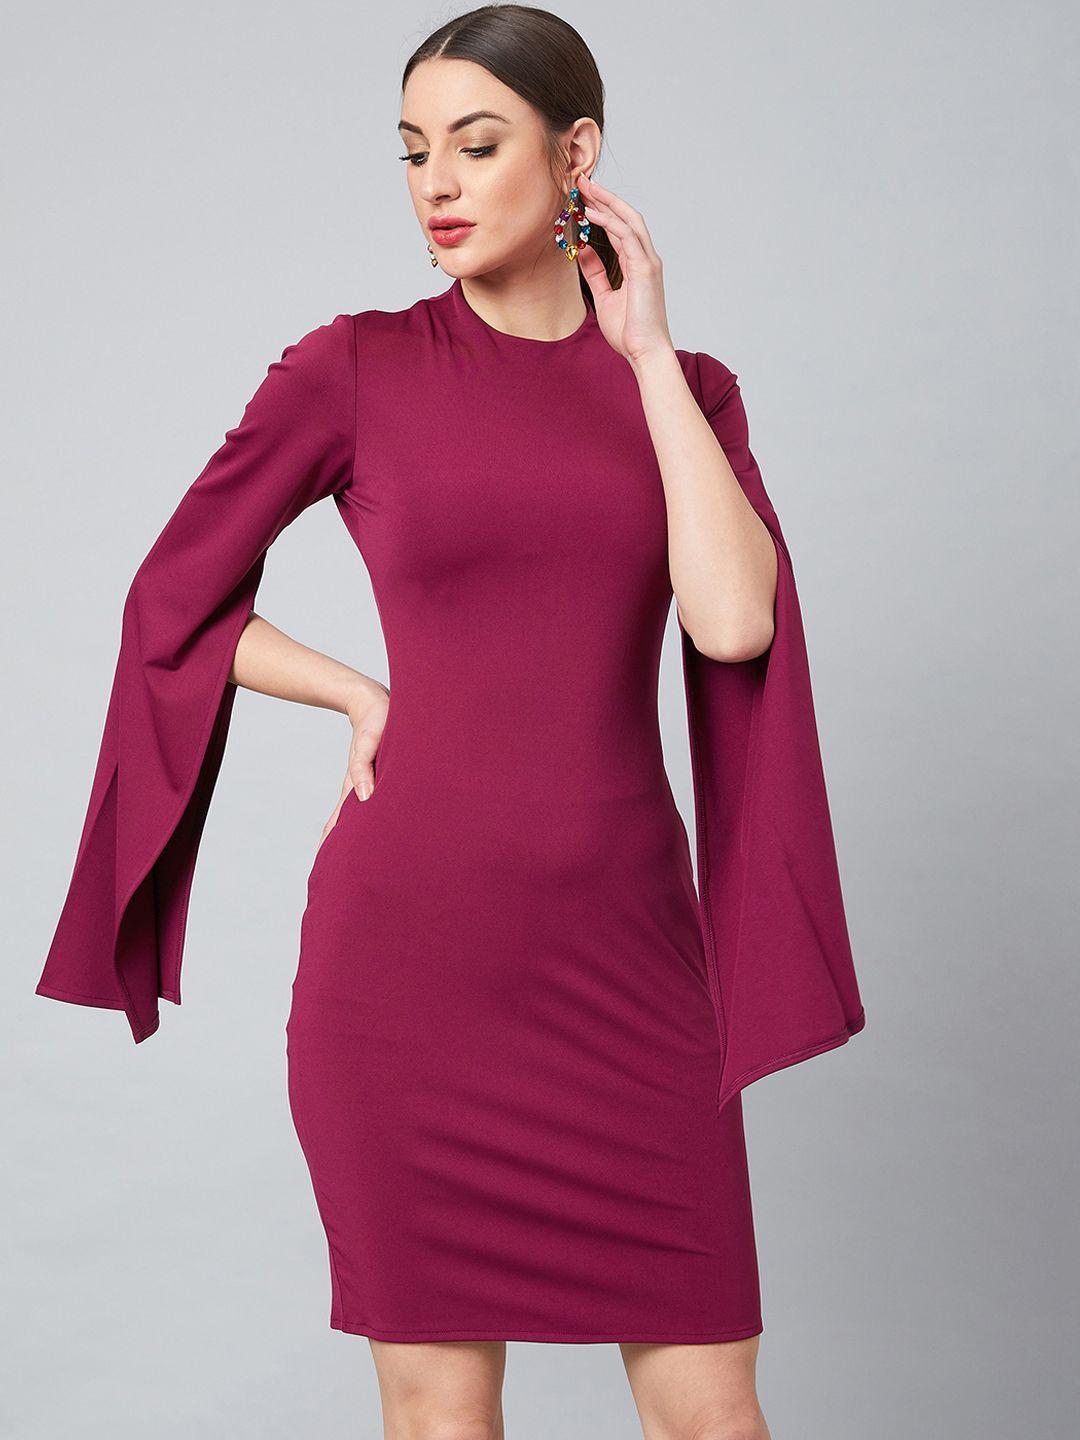 athena women purple solid sheath dress